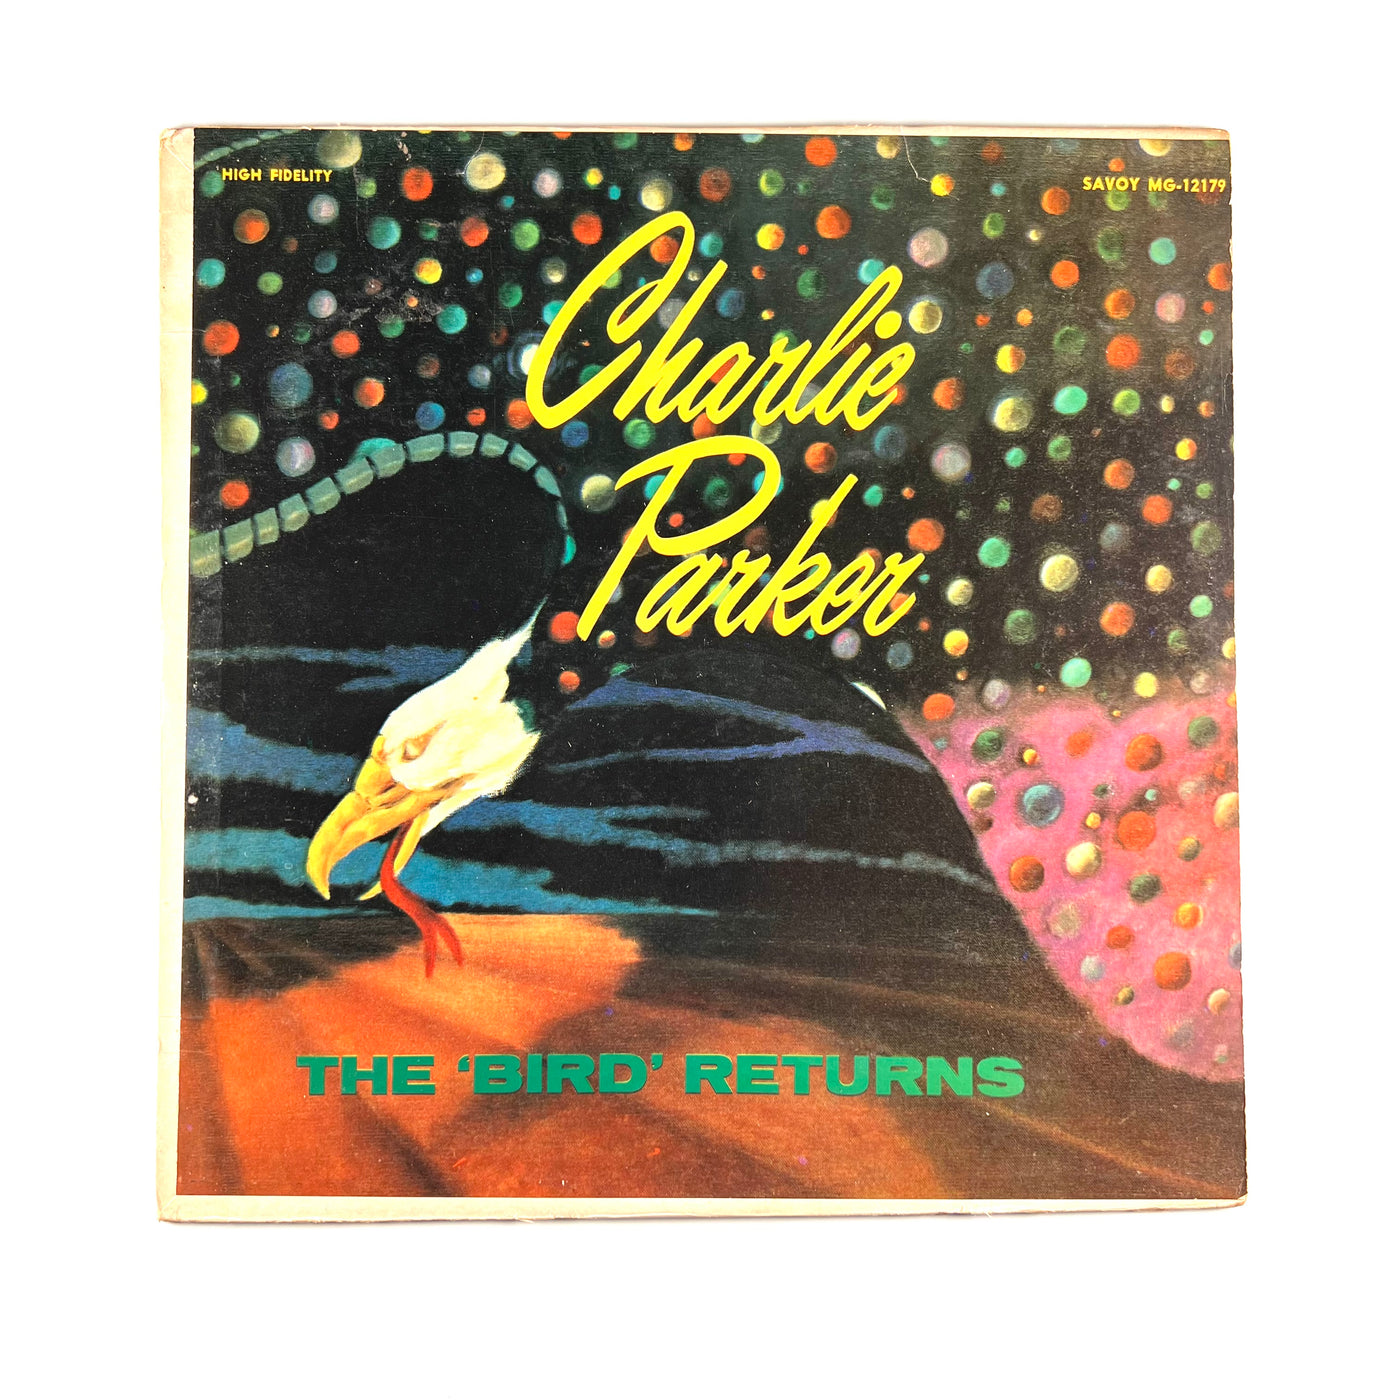 Charlie Parker - The 'Bird' Returns